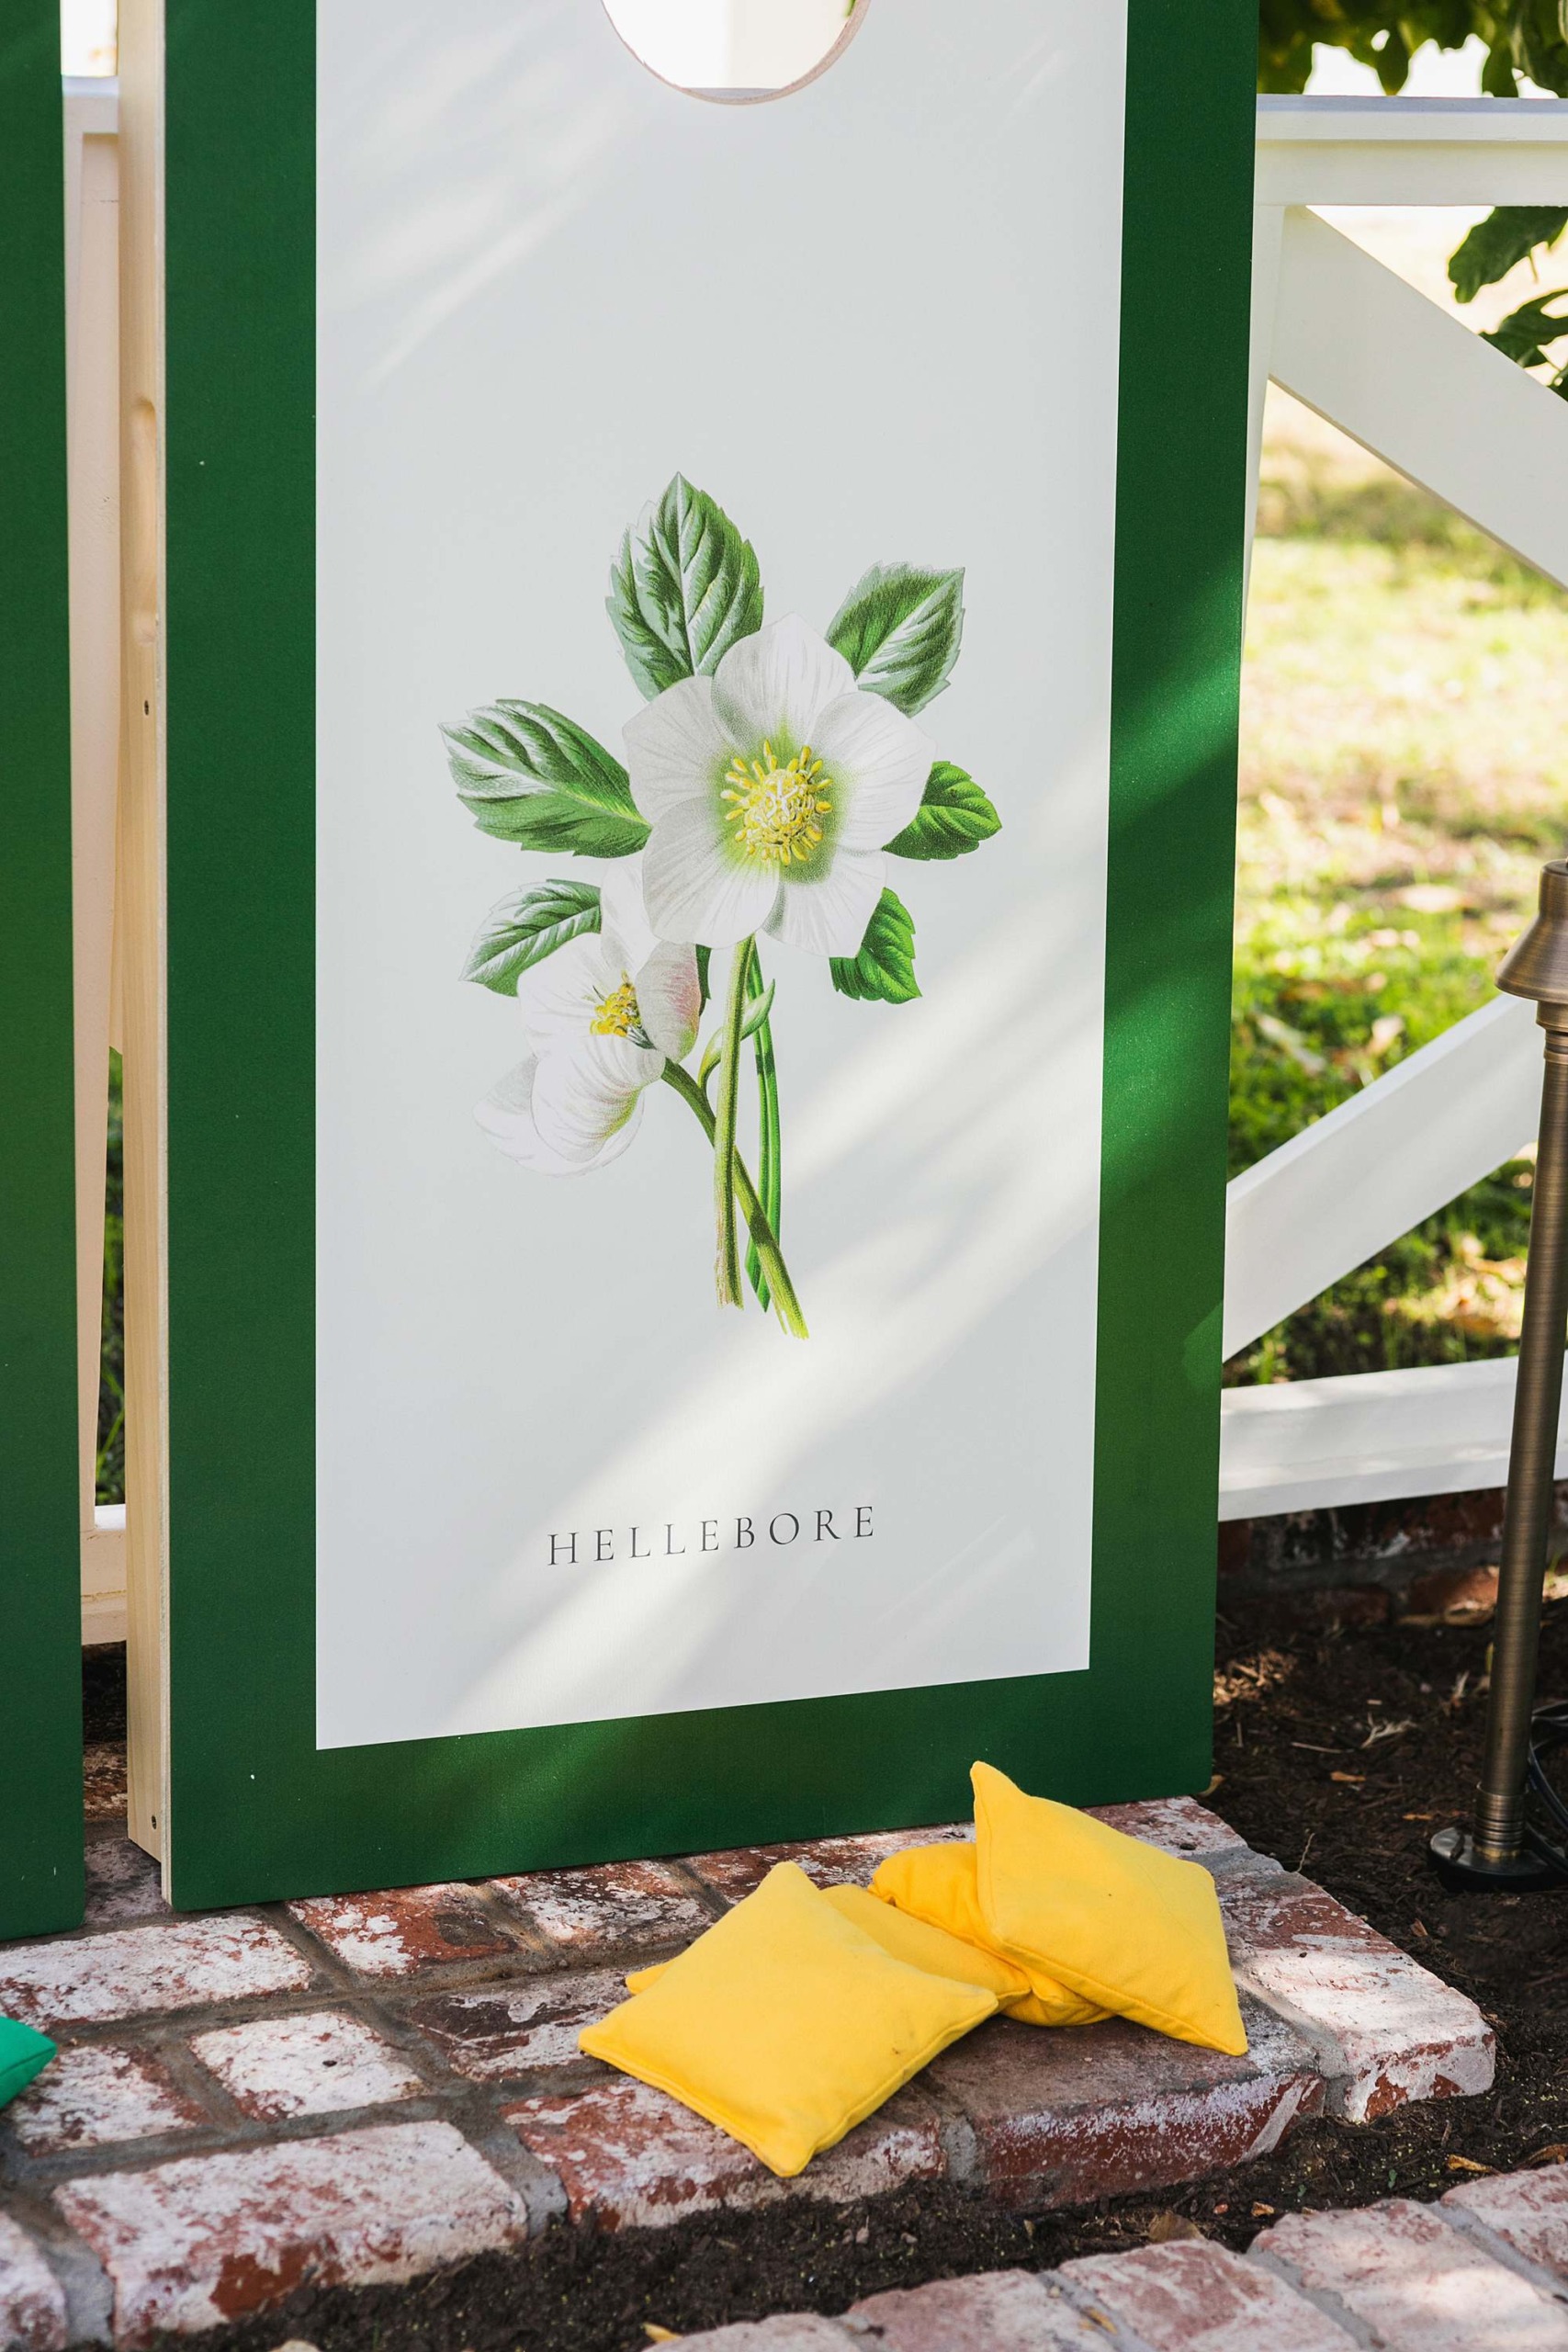 green and white flower custom cornhole board design ideas